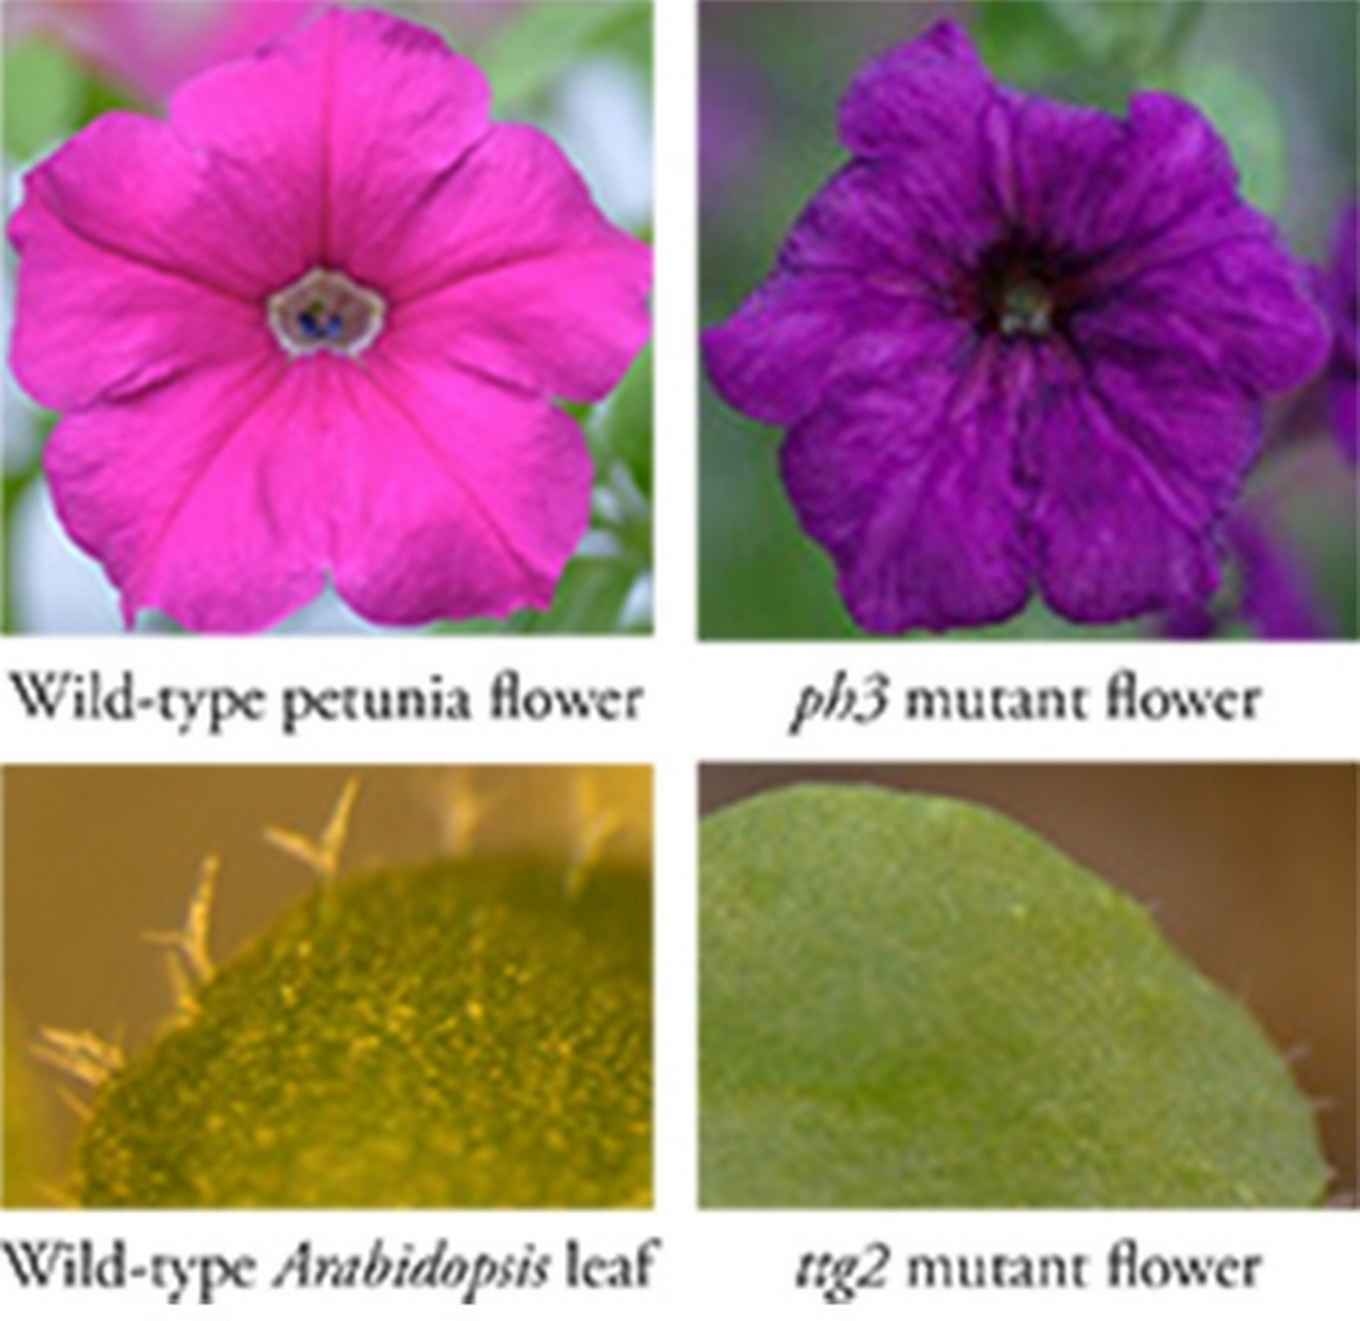 Petunia and Arabidopsis